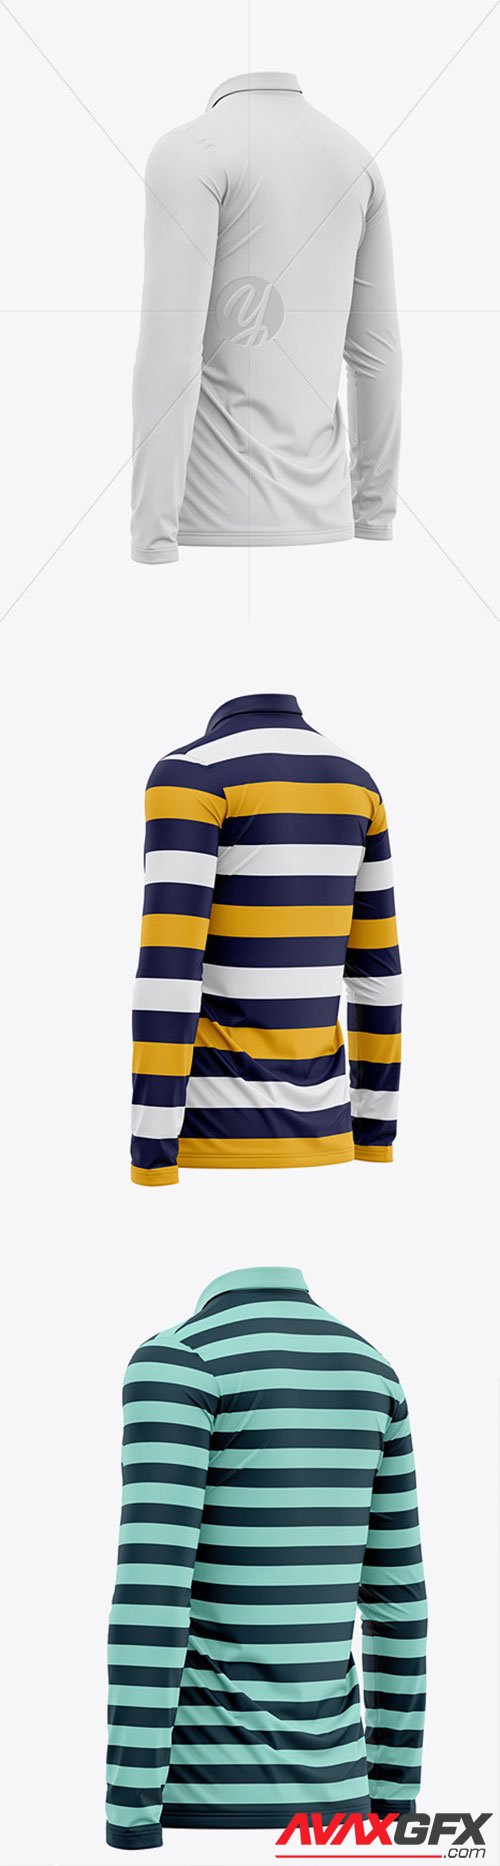 Men's Long Sleeve Polo Shirt - Back Half Side View 54996